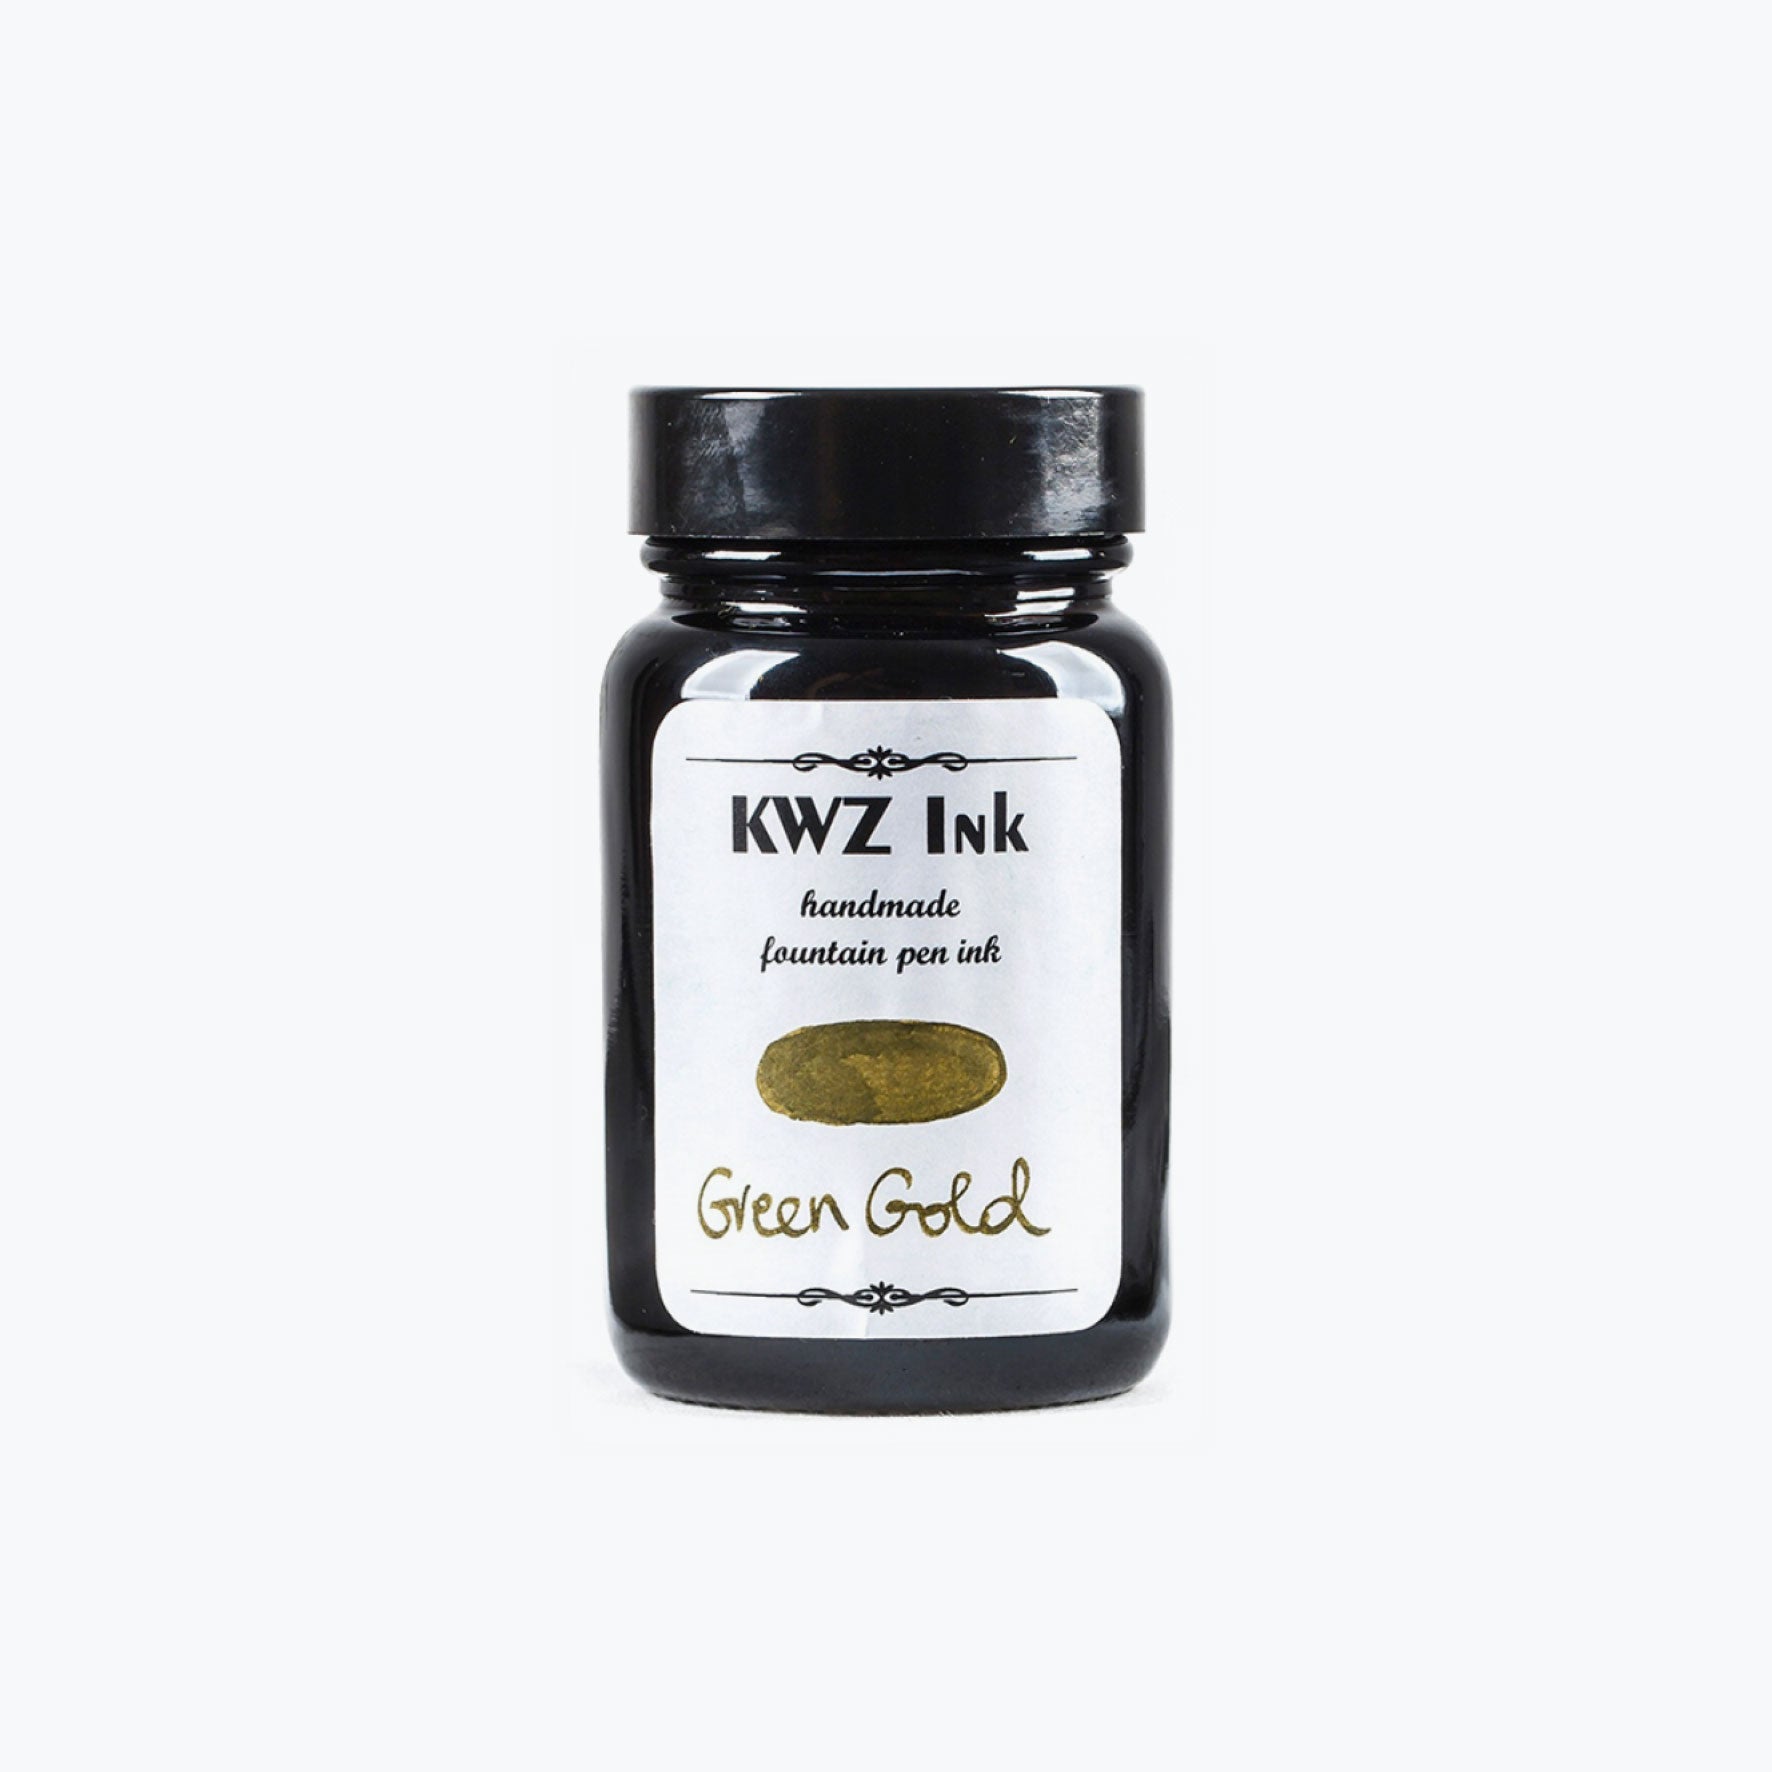 KWZ Green Gold fountain pen ink